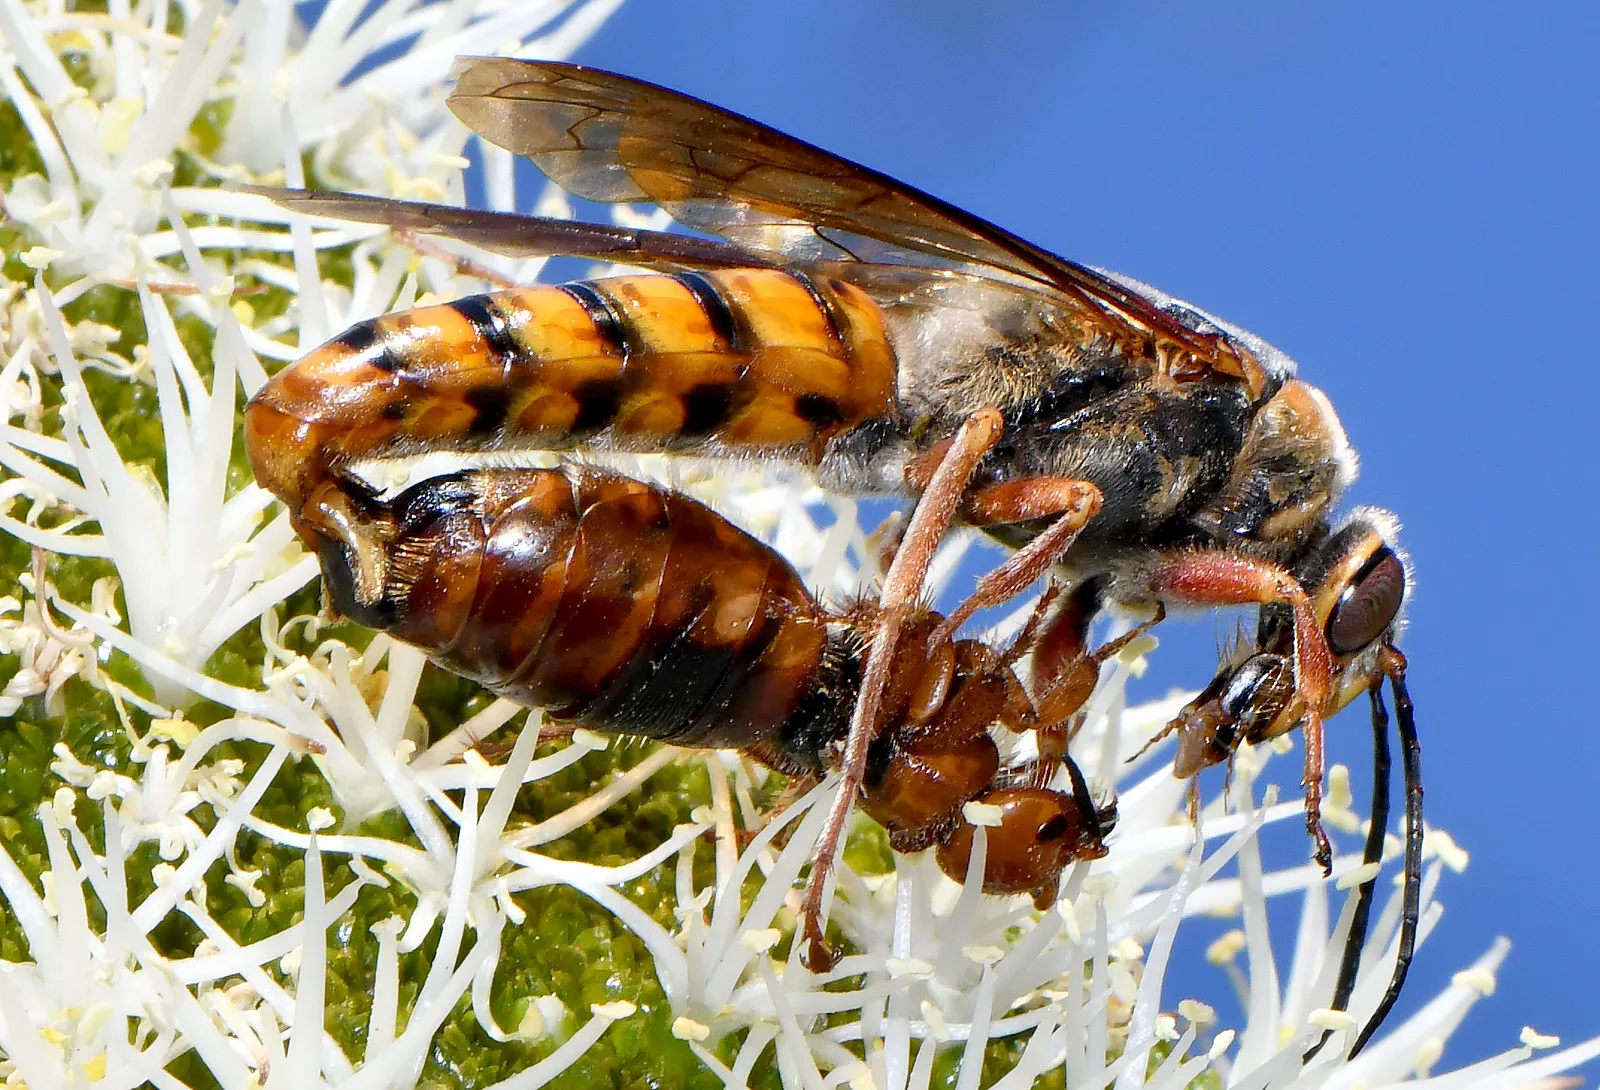 Do Wasps Eat Meat? Ecologic Classification of Wasps